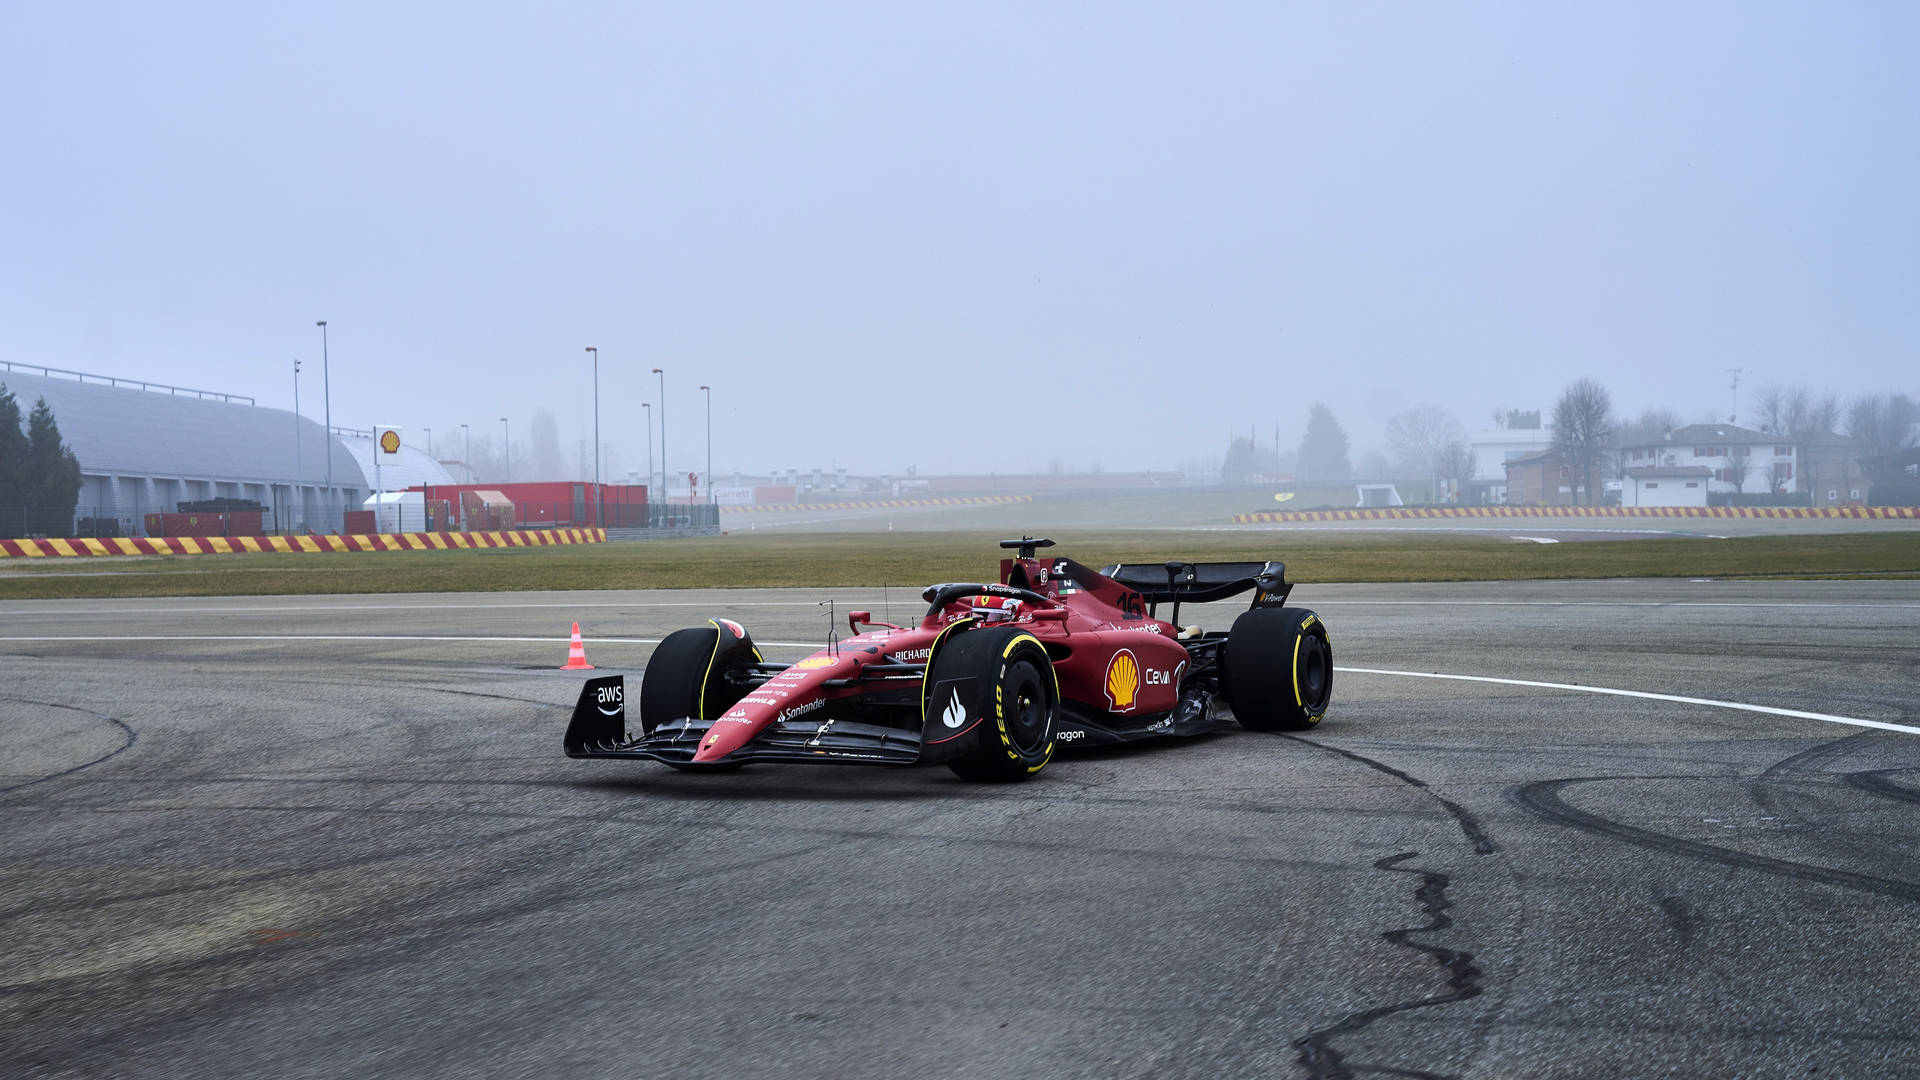 Ferrari F1 Car Driving On A Track In The Fog